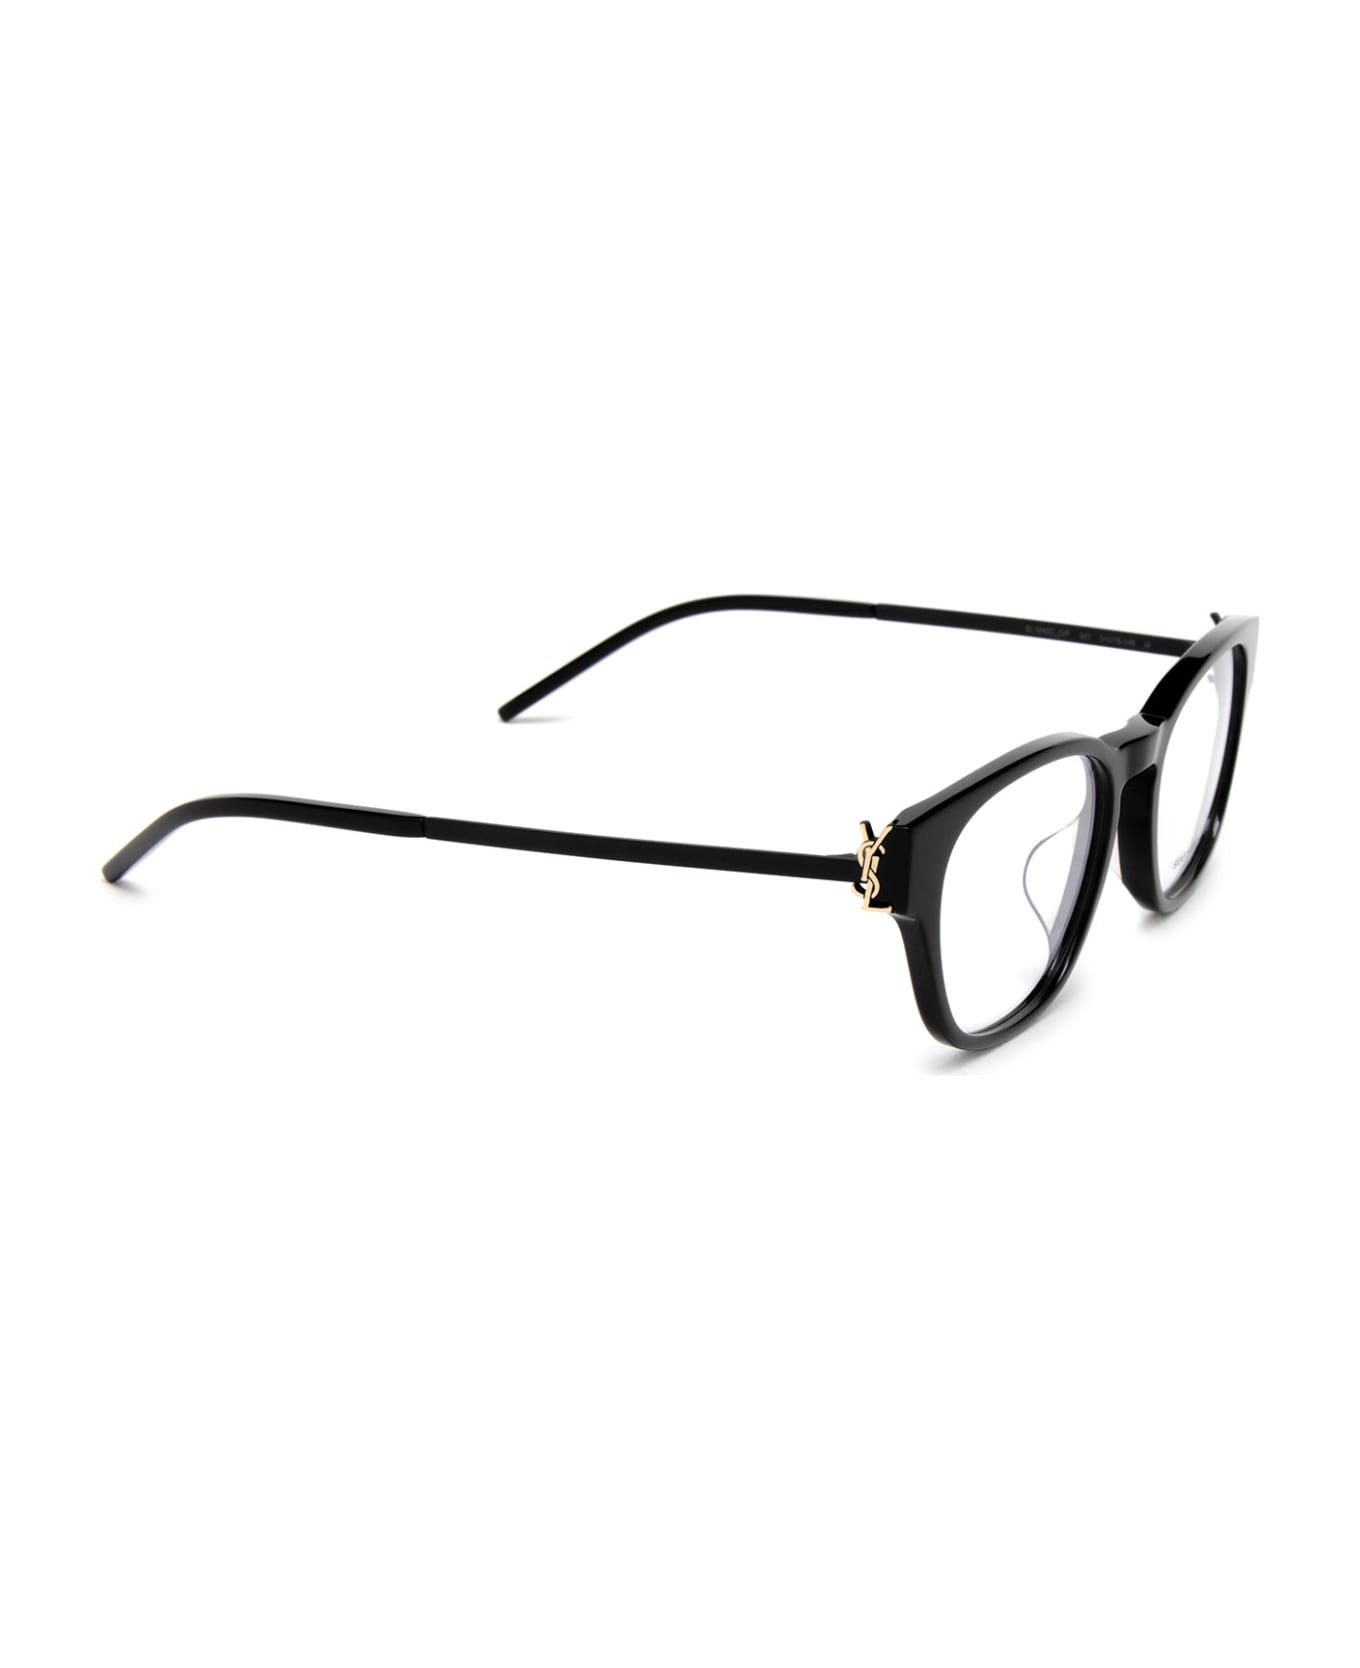 Saint Laurent Eyewear Sl M48o_d/f Black Glasses - Black